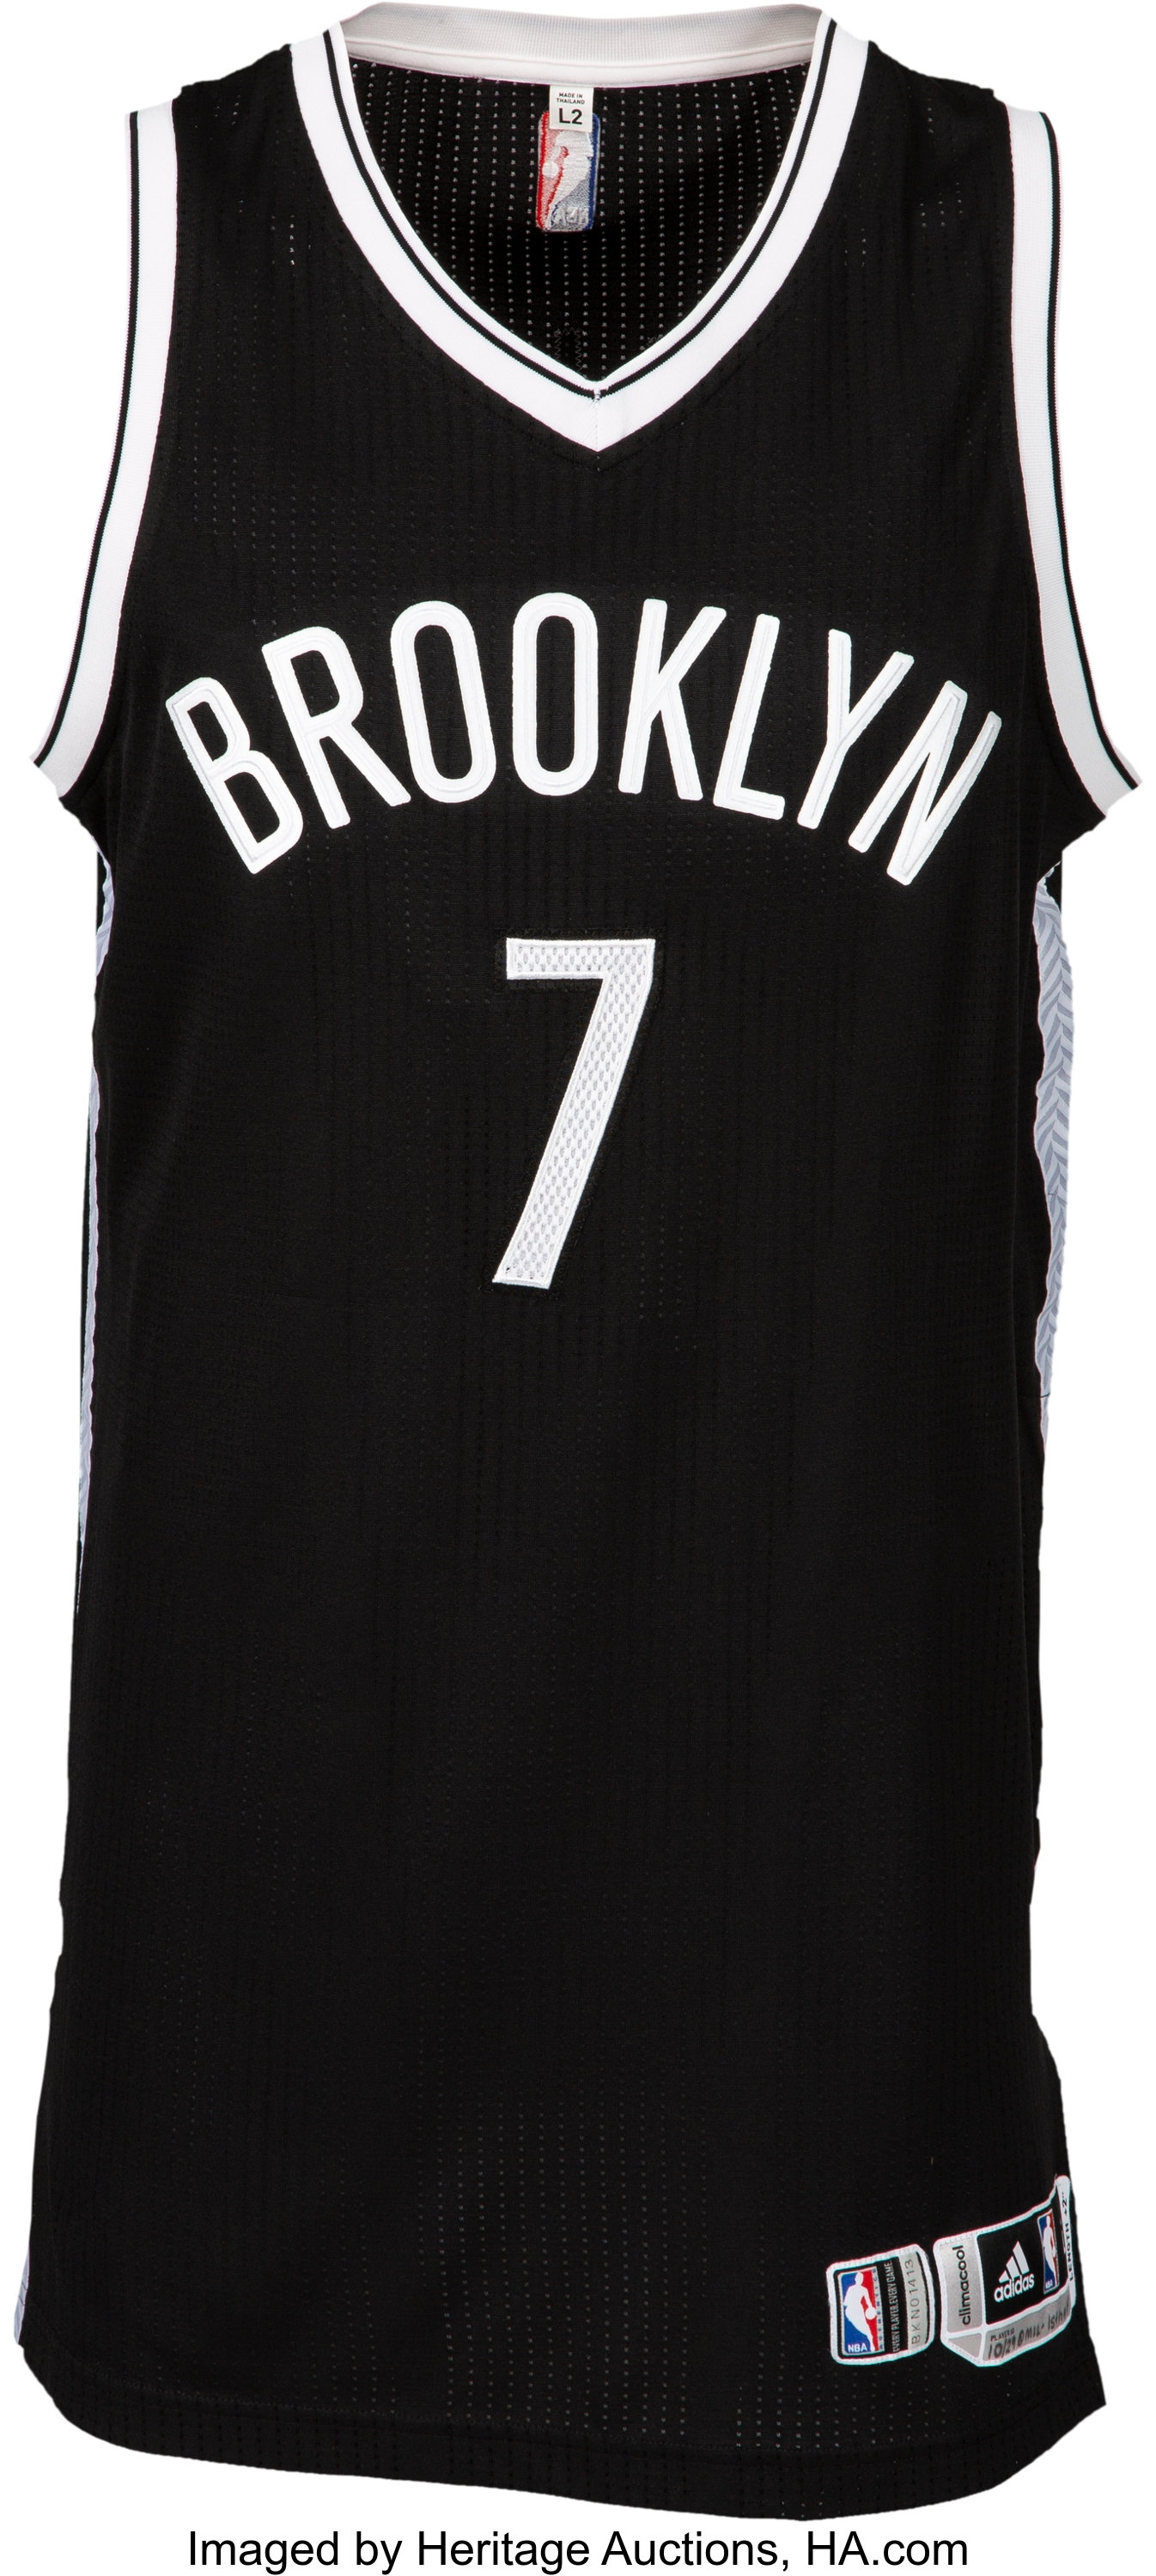 2016-17 Jeremy Lin Game Worn Brooklyn Nets Jersey - Used 10/29 vs., Lot  #57337